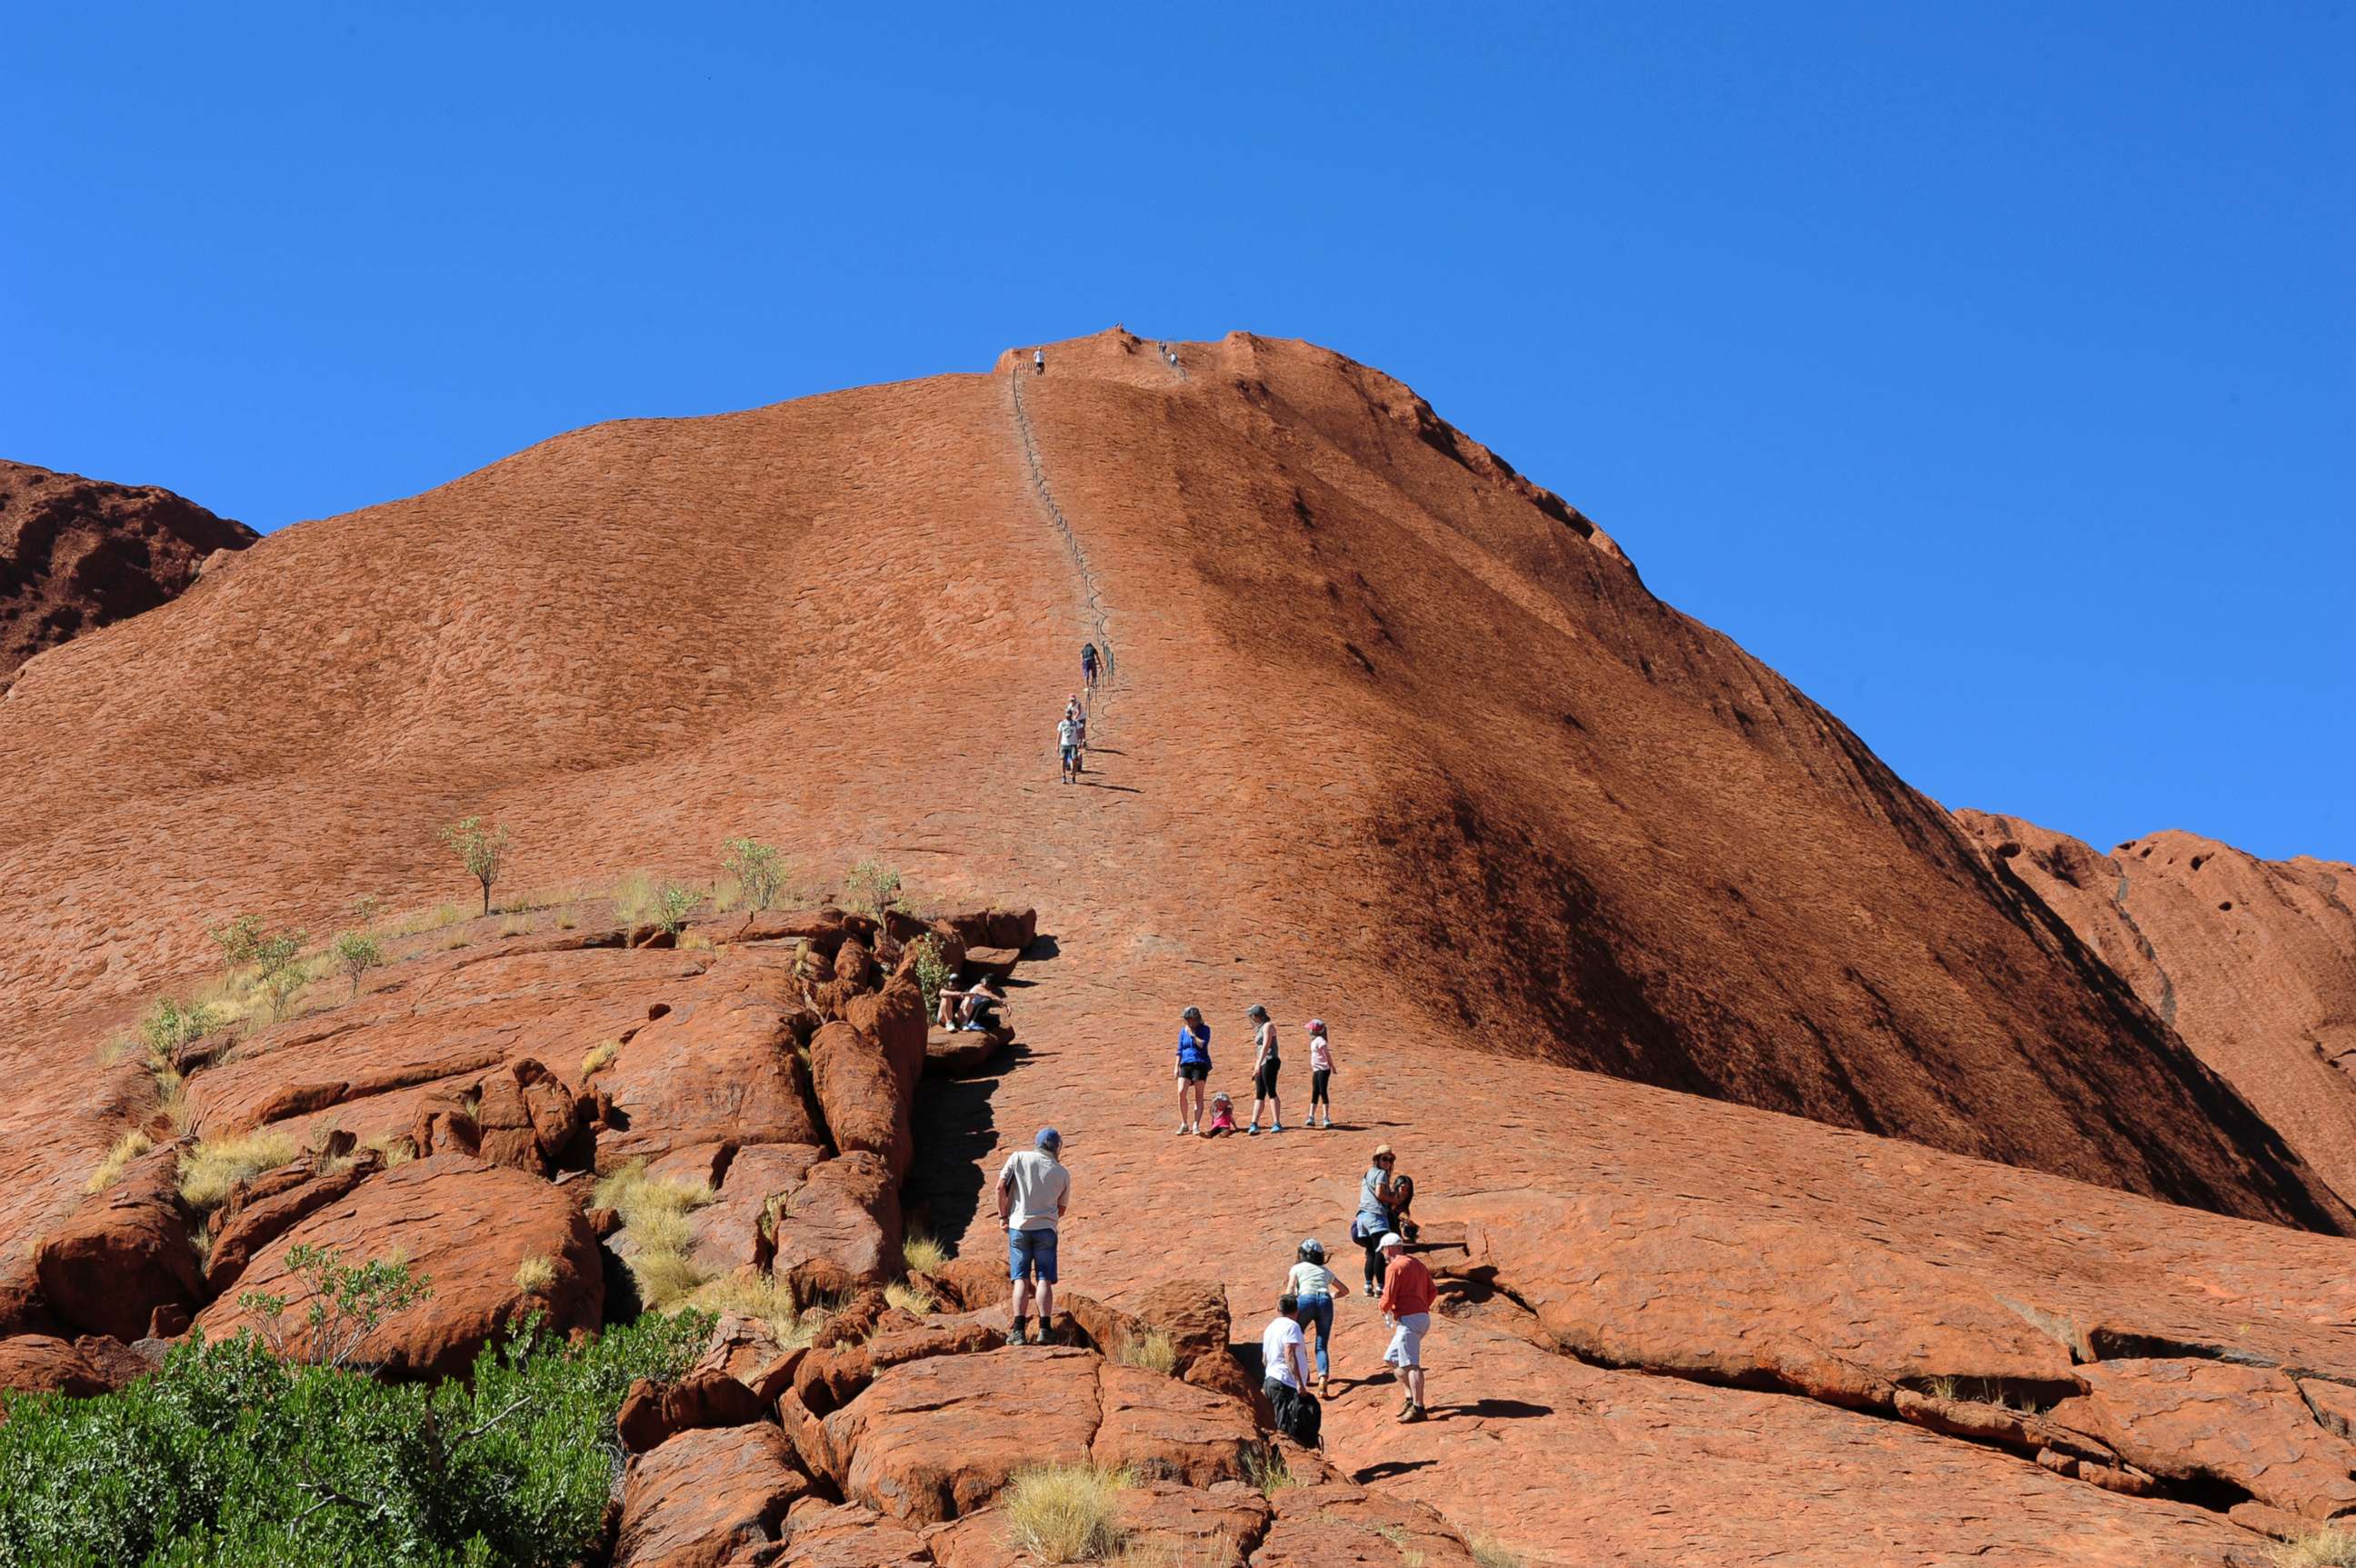 PHOTO: In this file photo, tourists climb on the rock formation of the Uluru in the Uluru Kata Tjuta National Park in Australia, April 15, 2018.